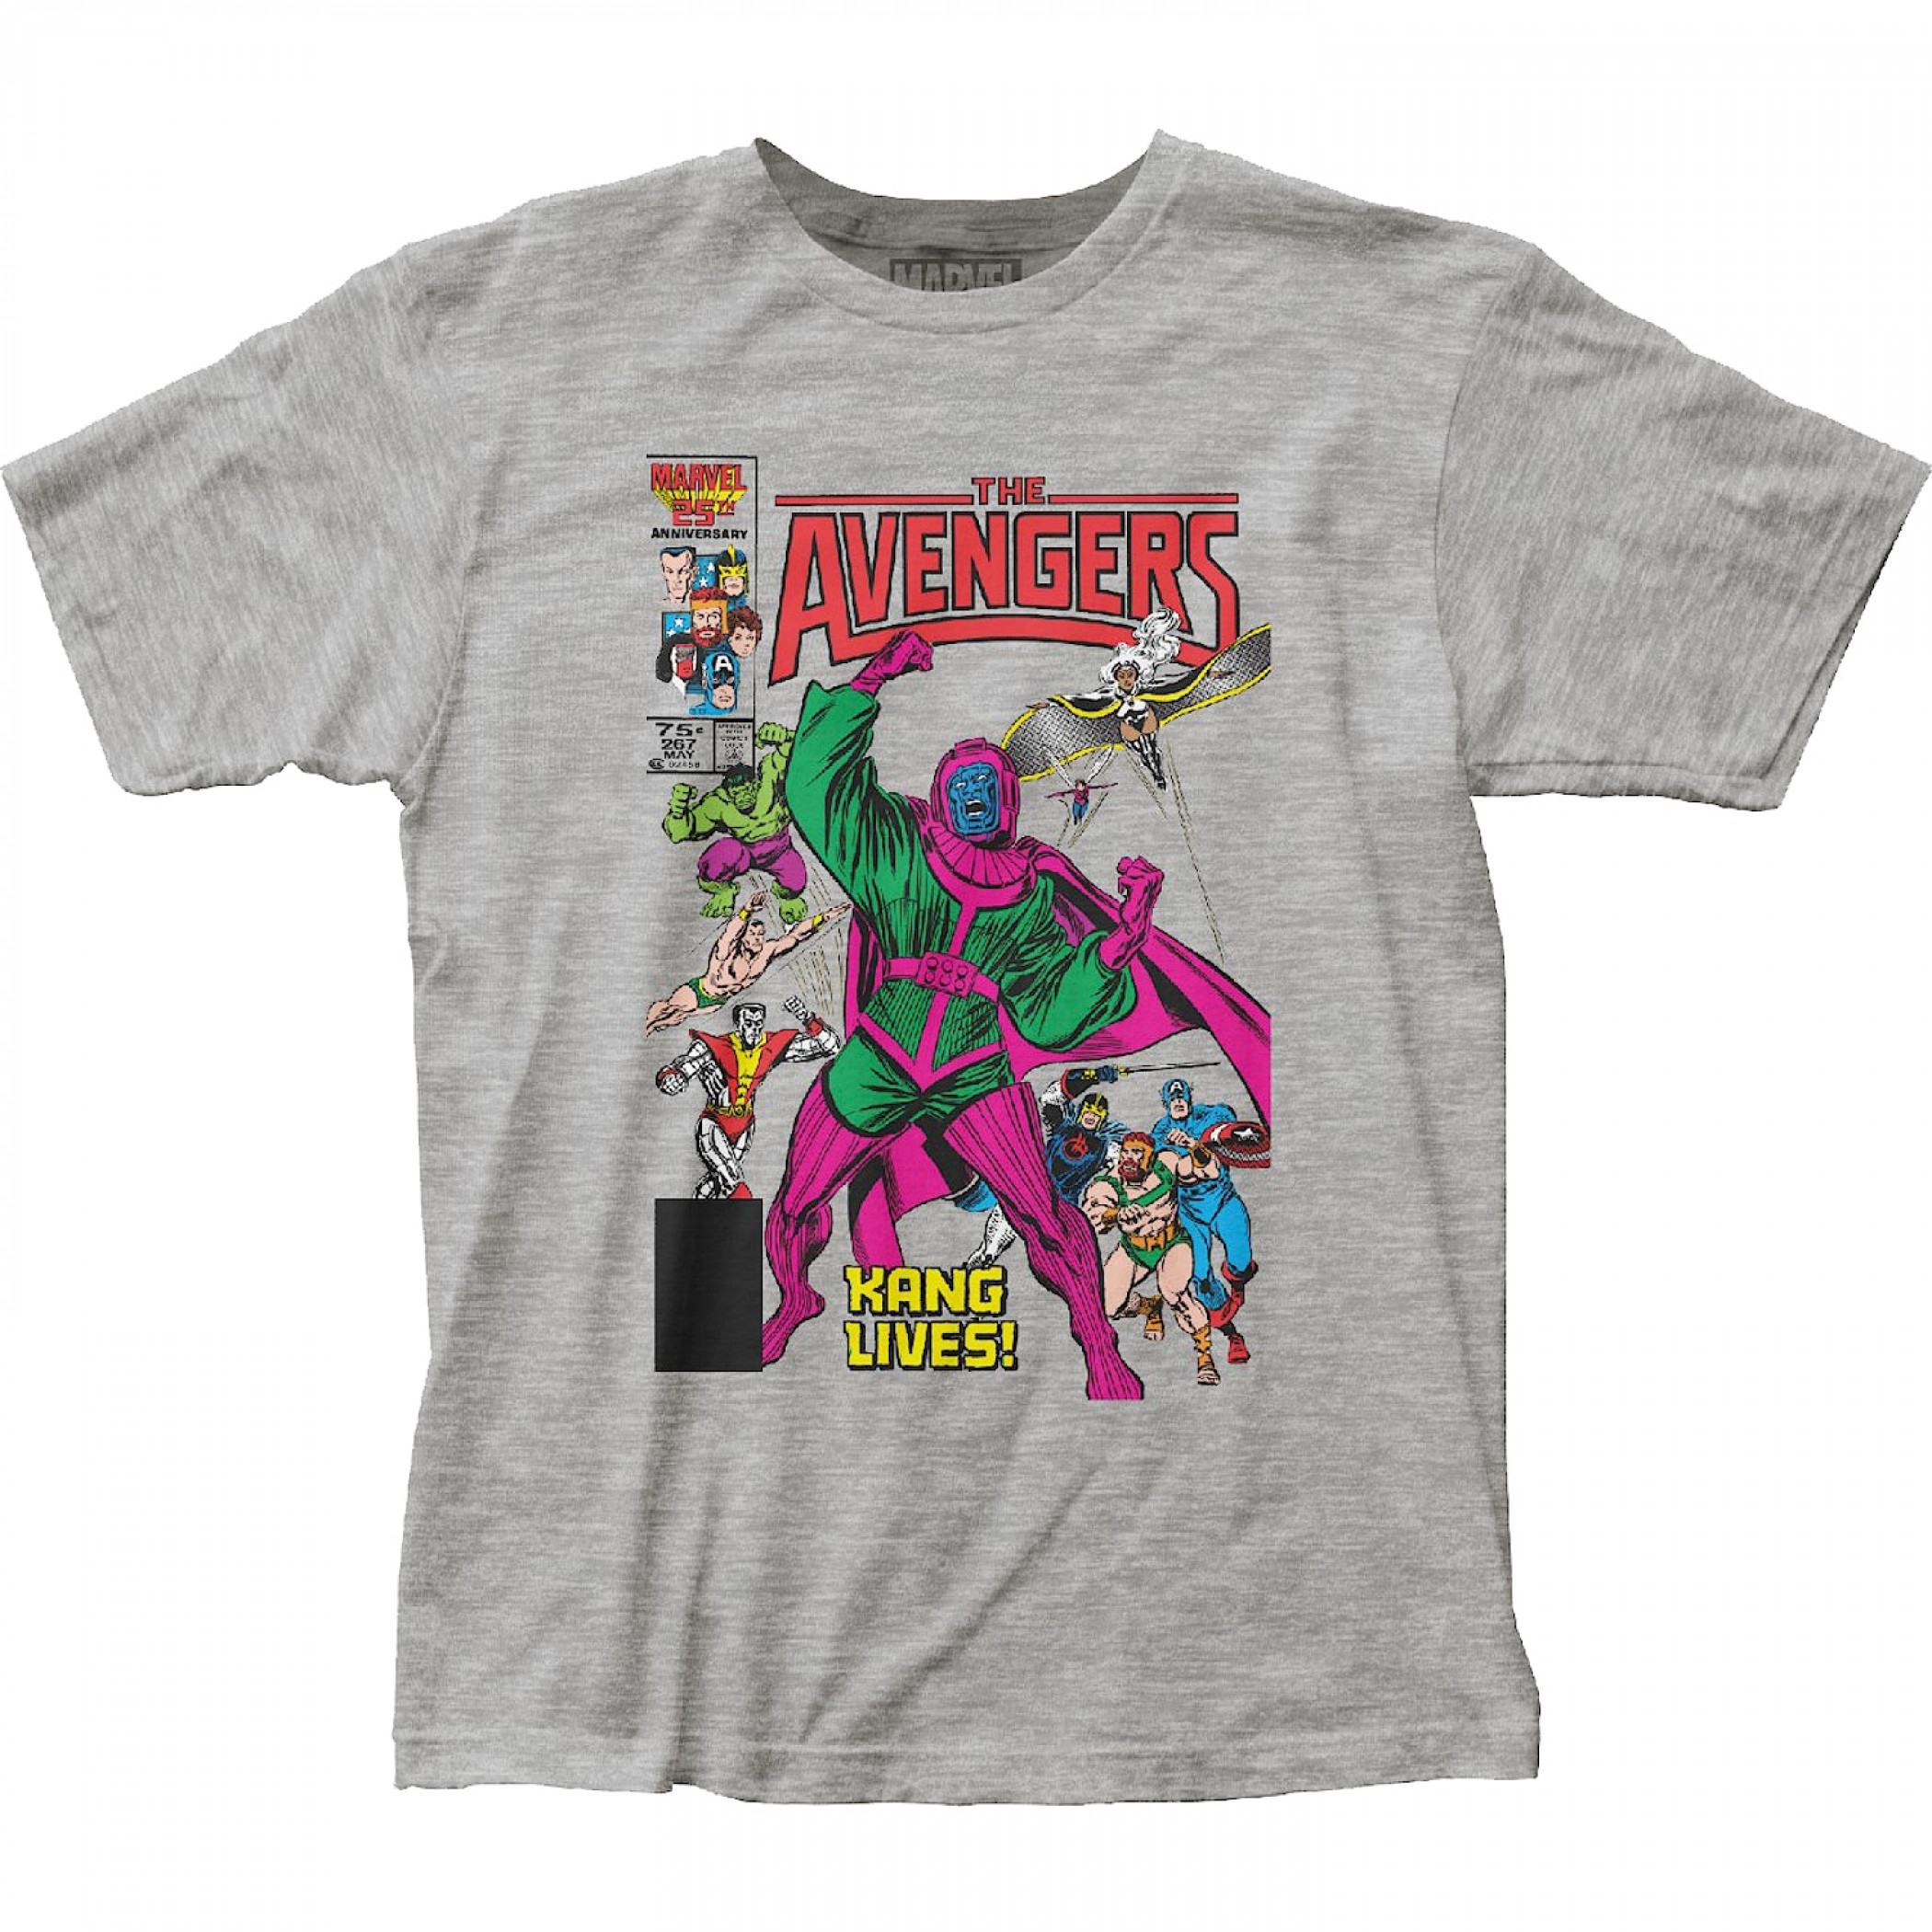 The Avengers Kang Lives! Comic Cover T-Shirt